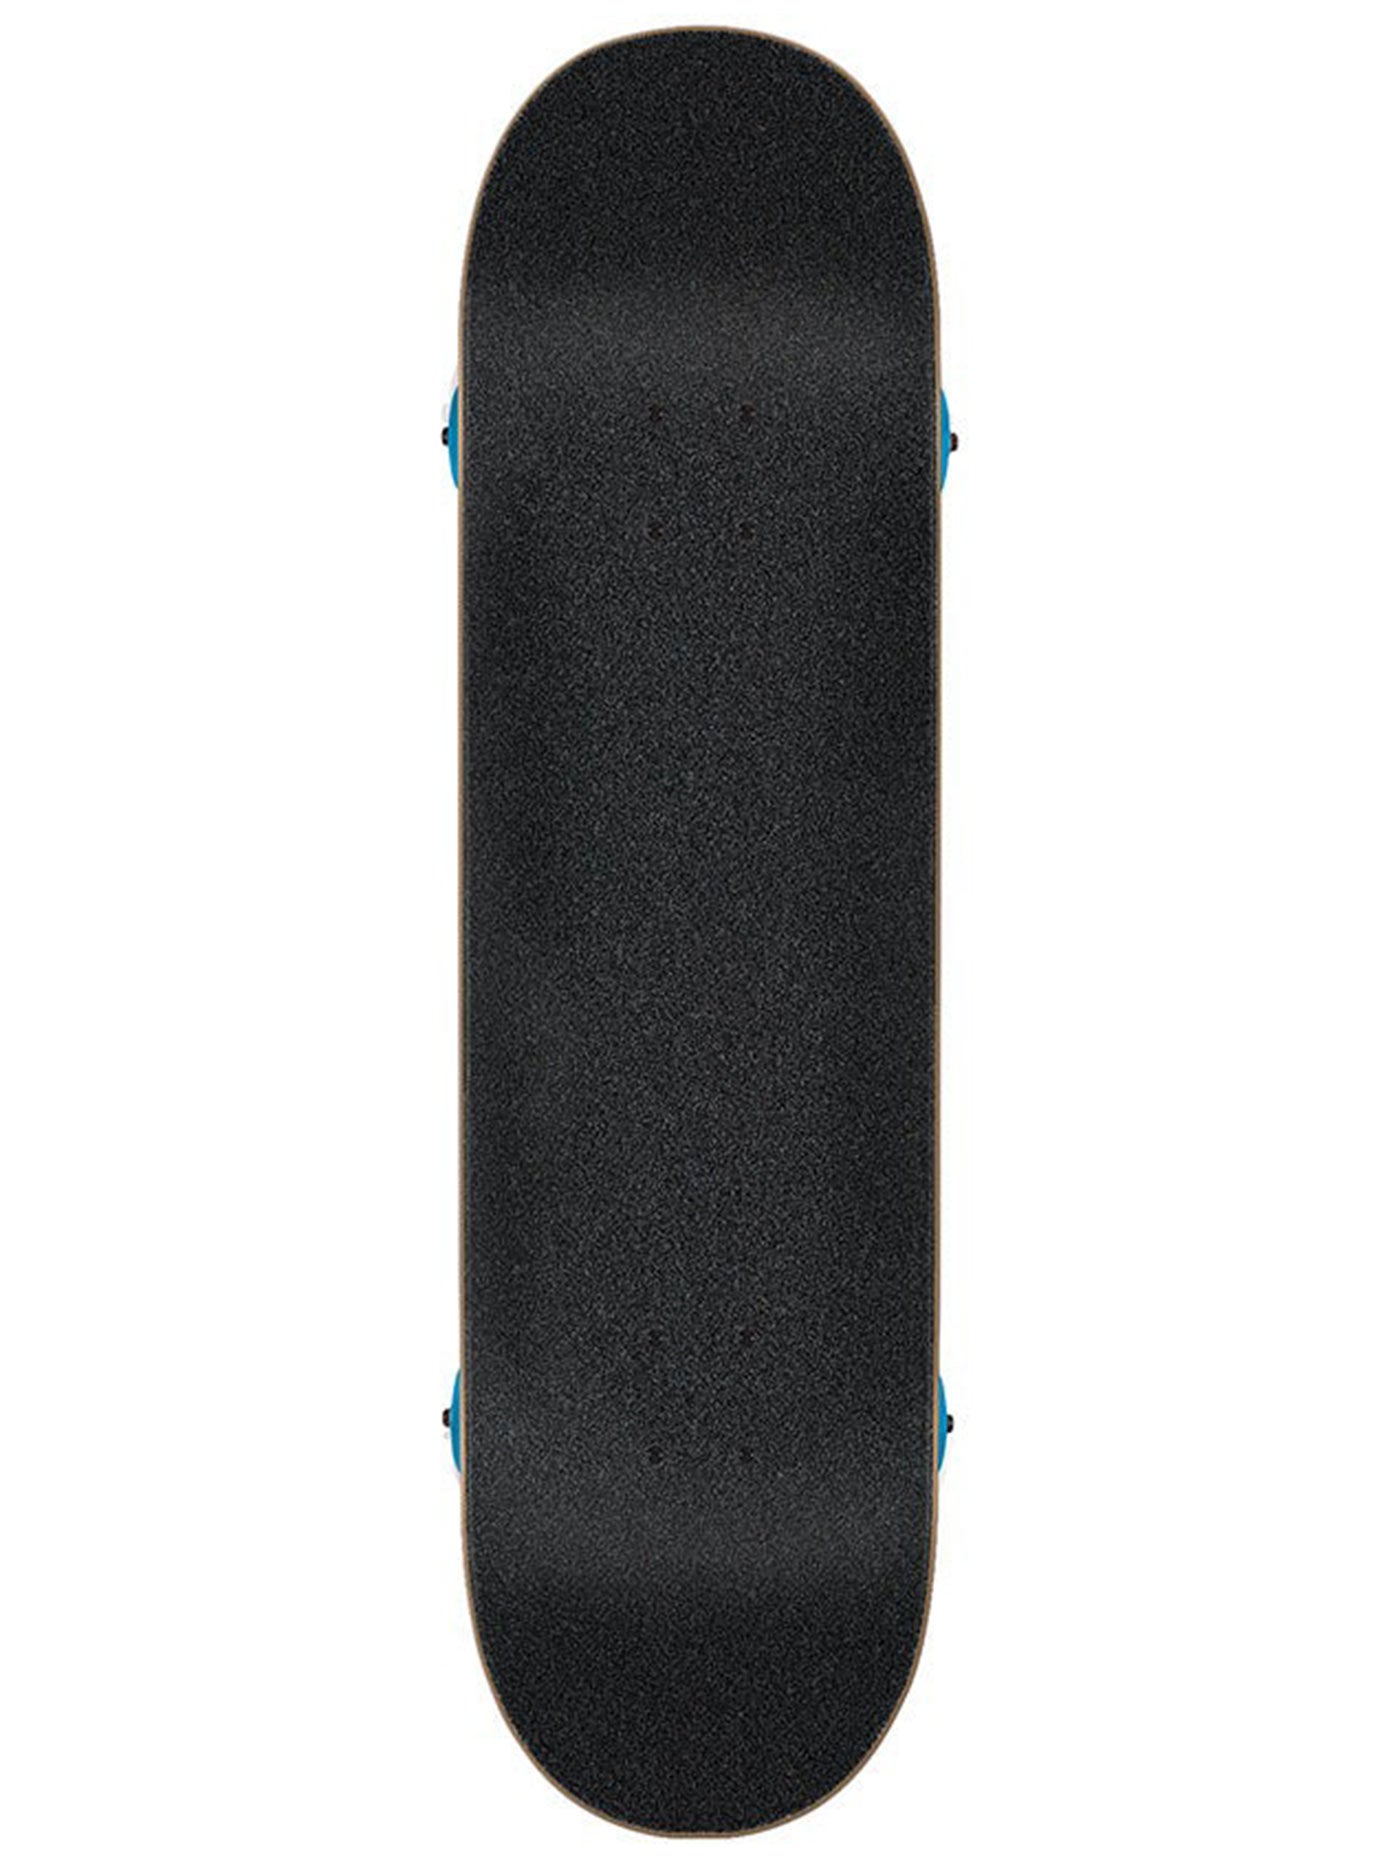 Santa Cruz Screaming Hand Mid 7.8 Complete Skateboard